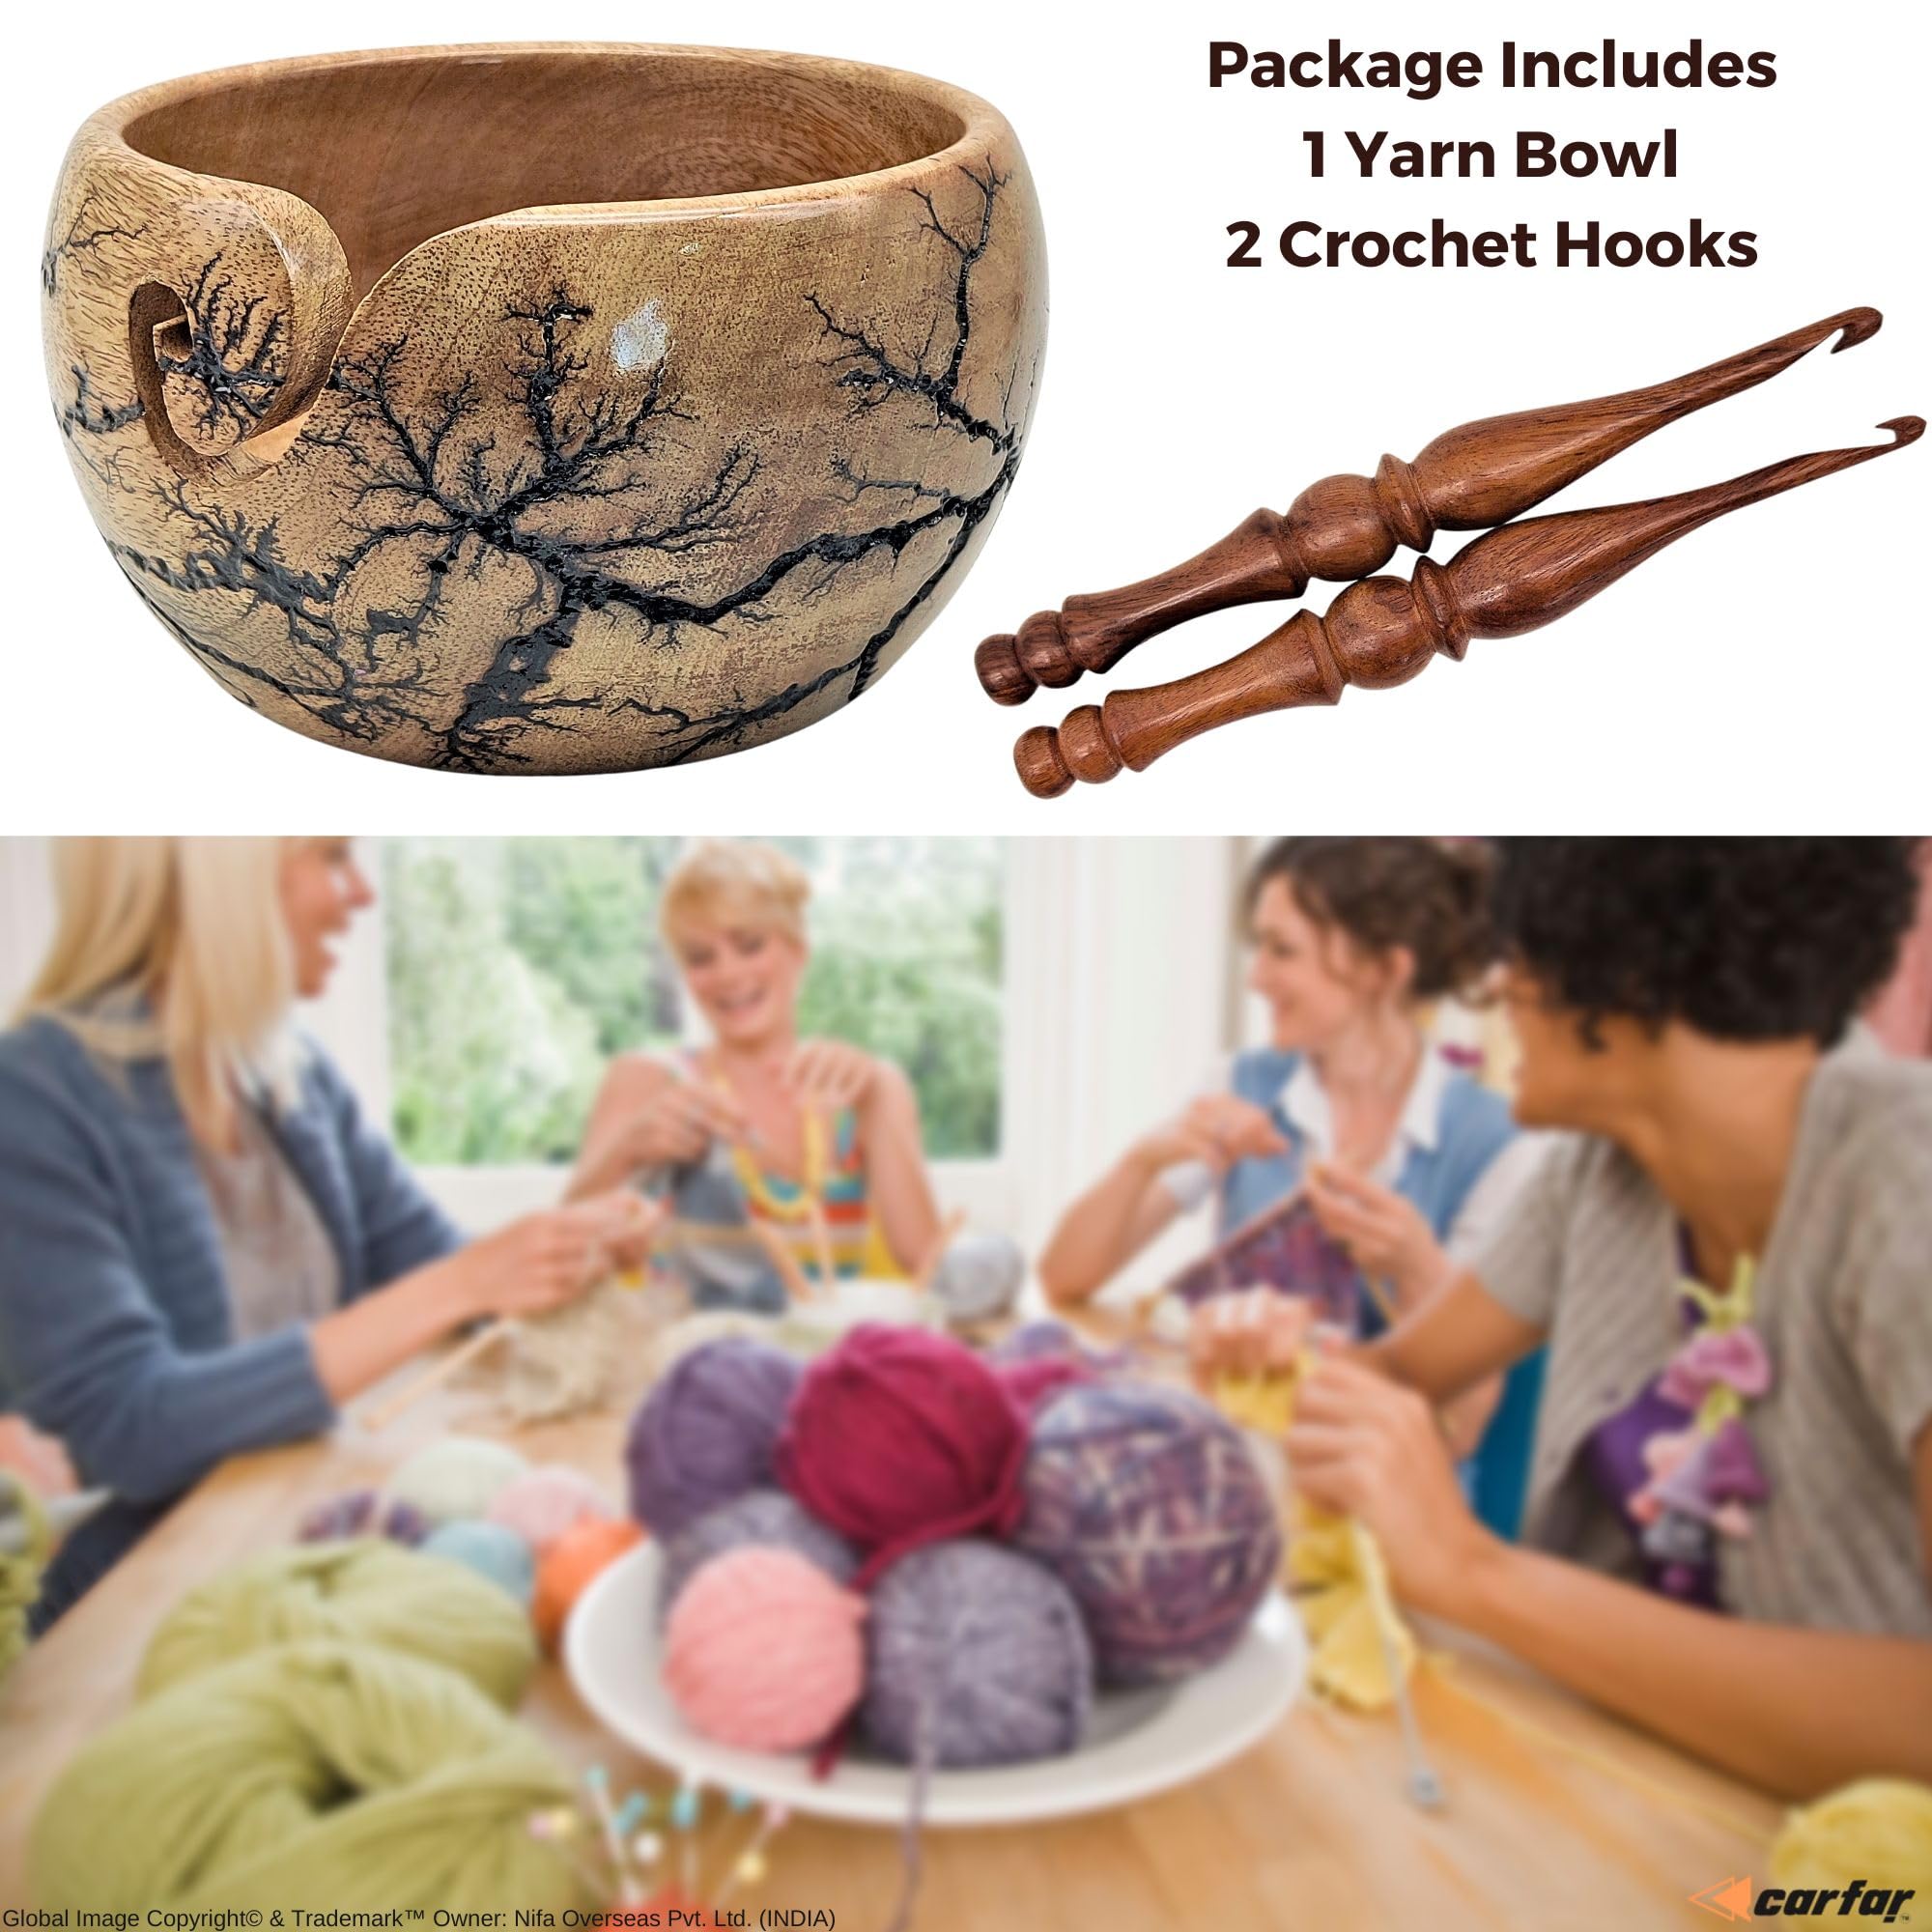 Carfar Knitting Yarn Bowl & Crochet Hooks Set Handmade Wooden Black Texture Yarn Bowl for Crocheting and Knitting